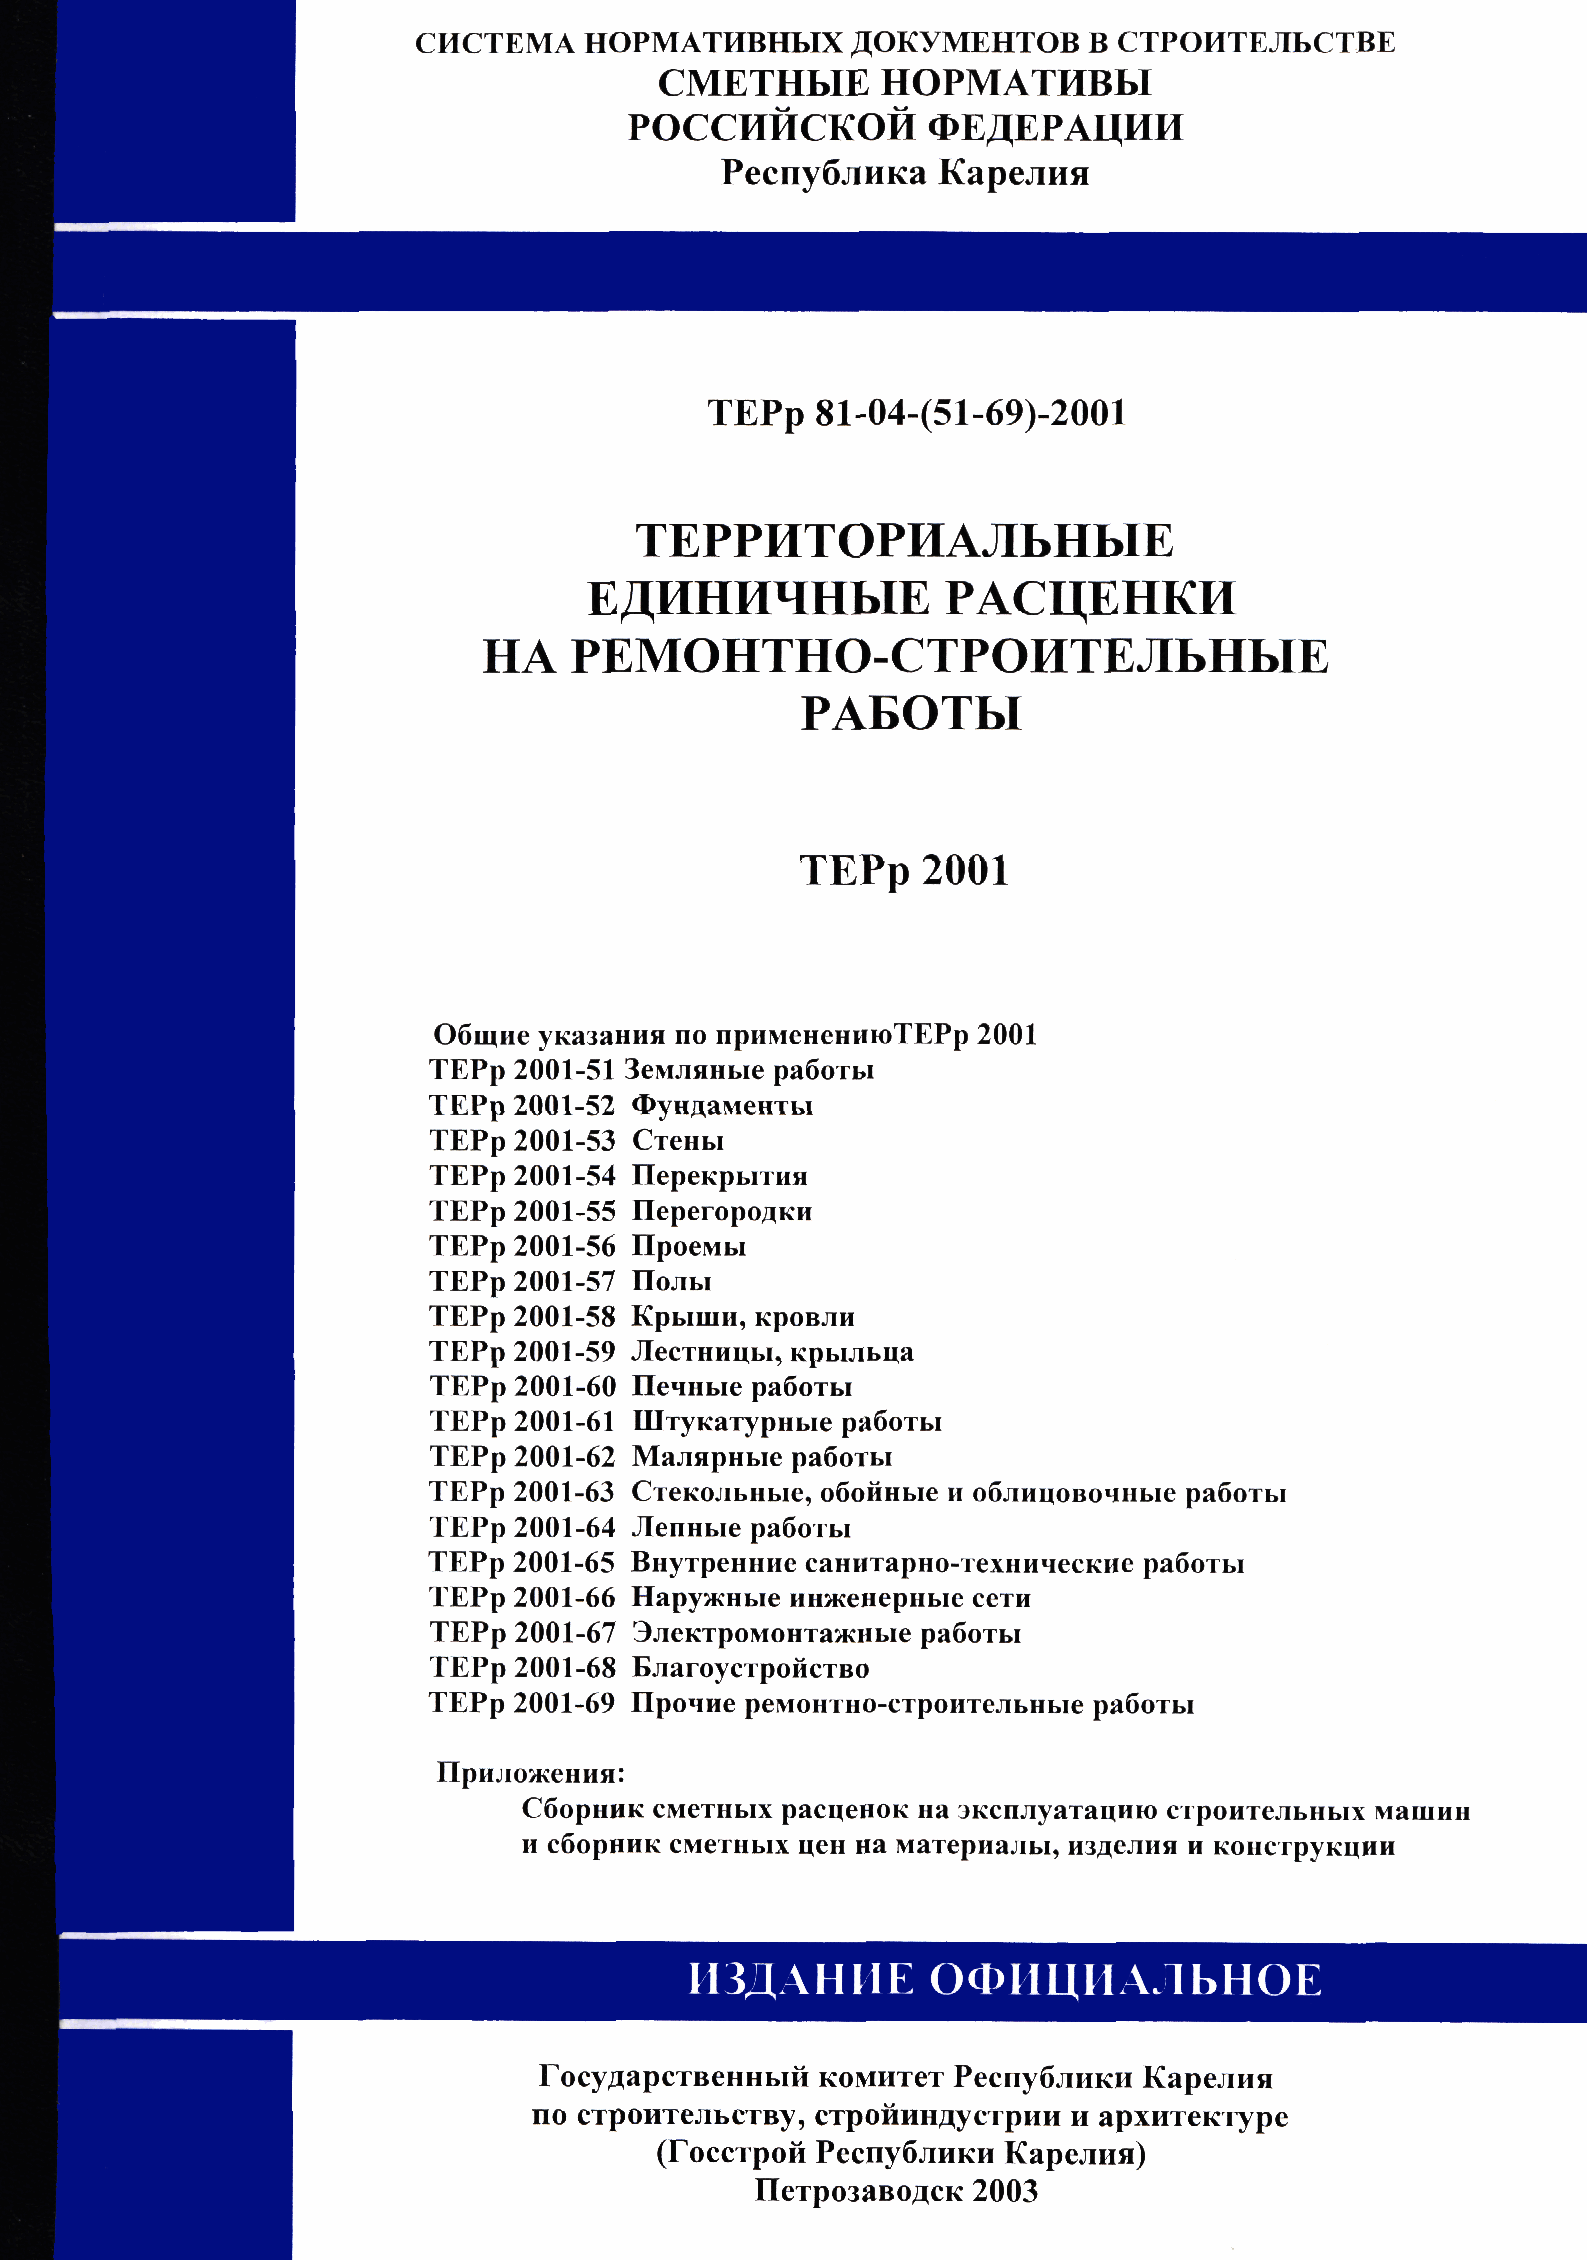 ТЕРр Республика Карелия 2001-68